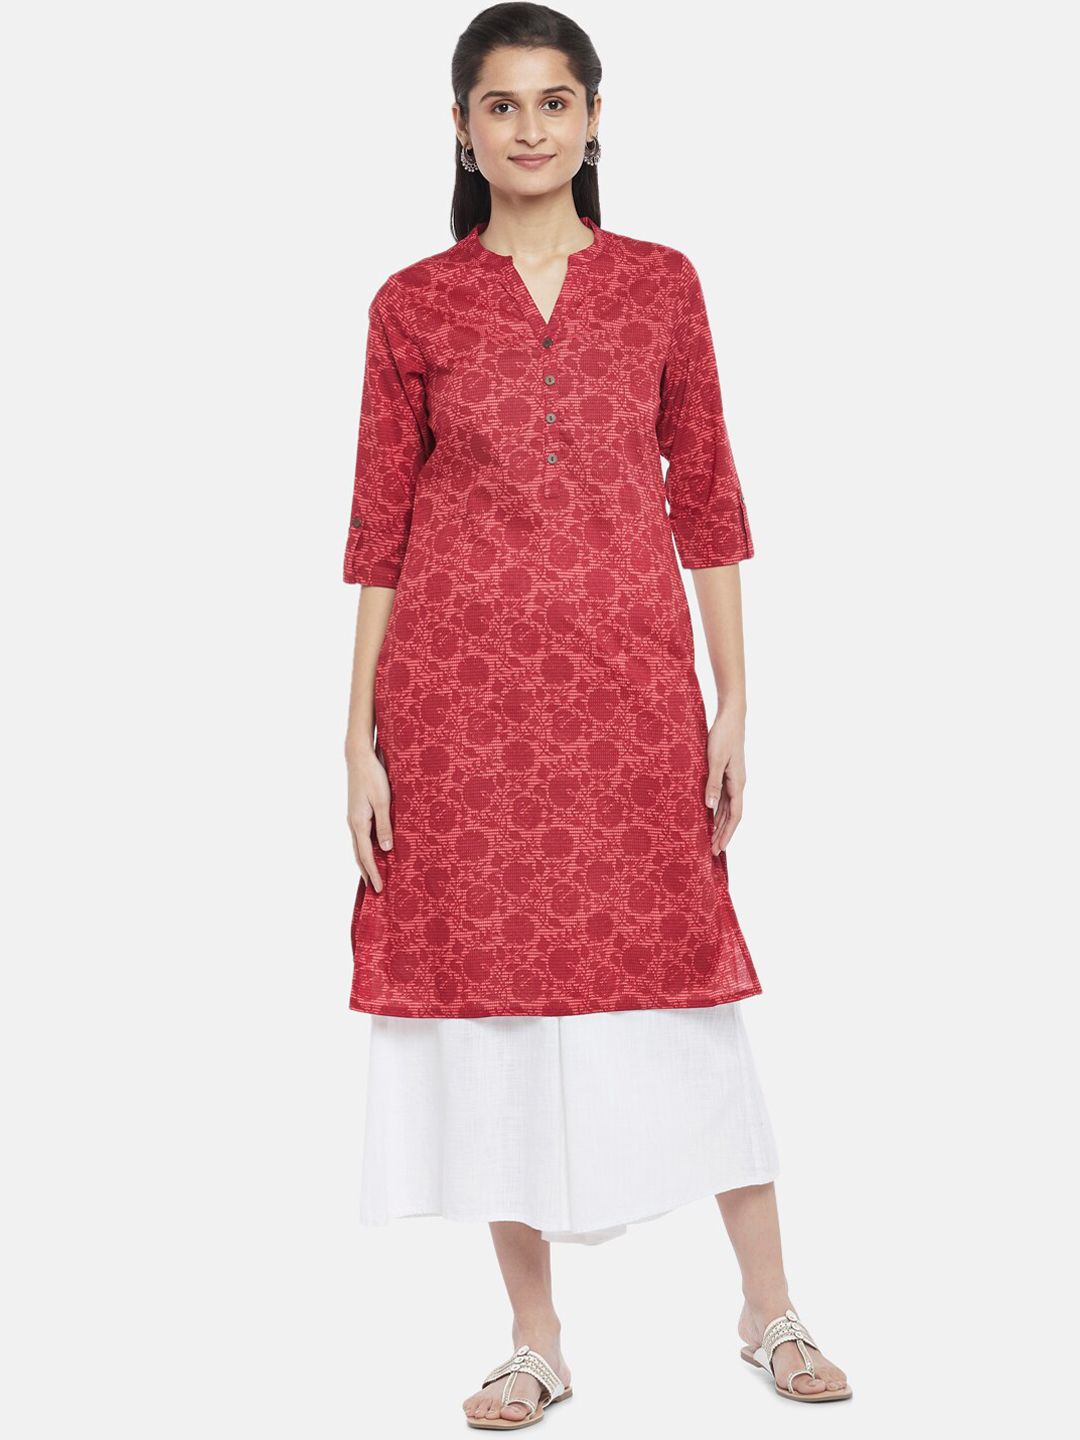 RANGMANCH BY PANTALOONS Women Red Floral Printed Thread Work Kurta Price in India